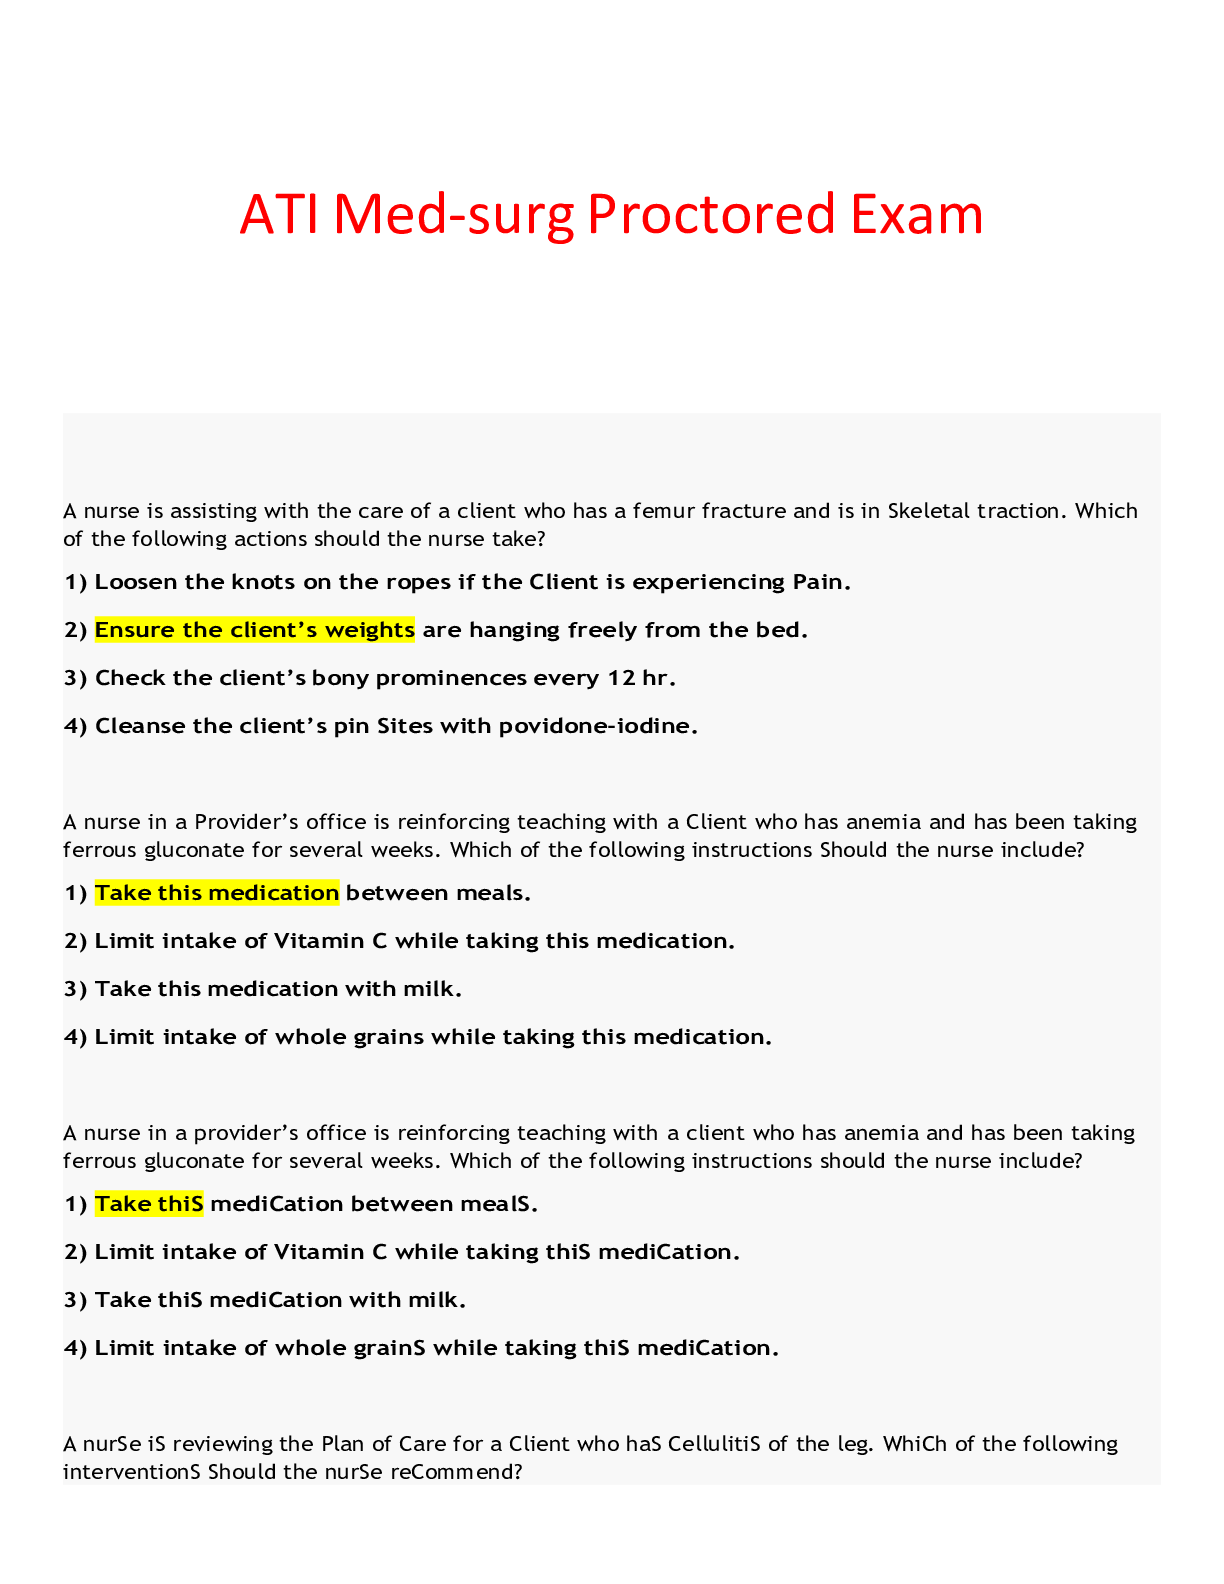 ATI Medsurg Proctored Exam